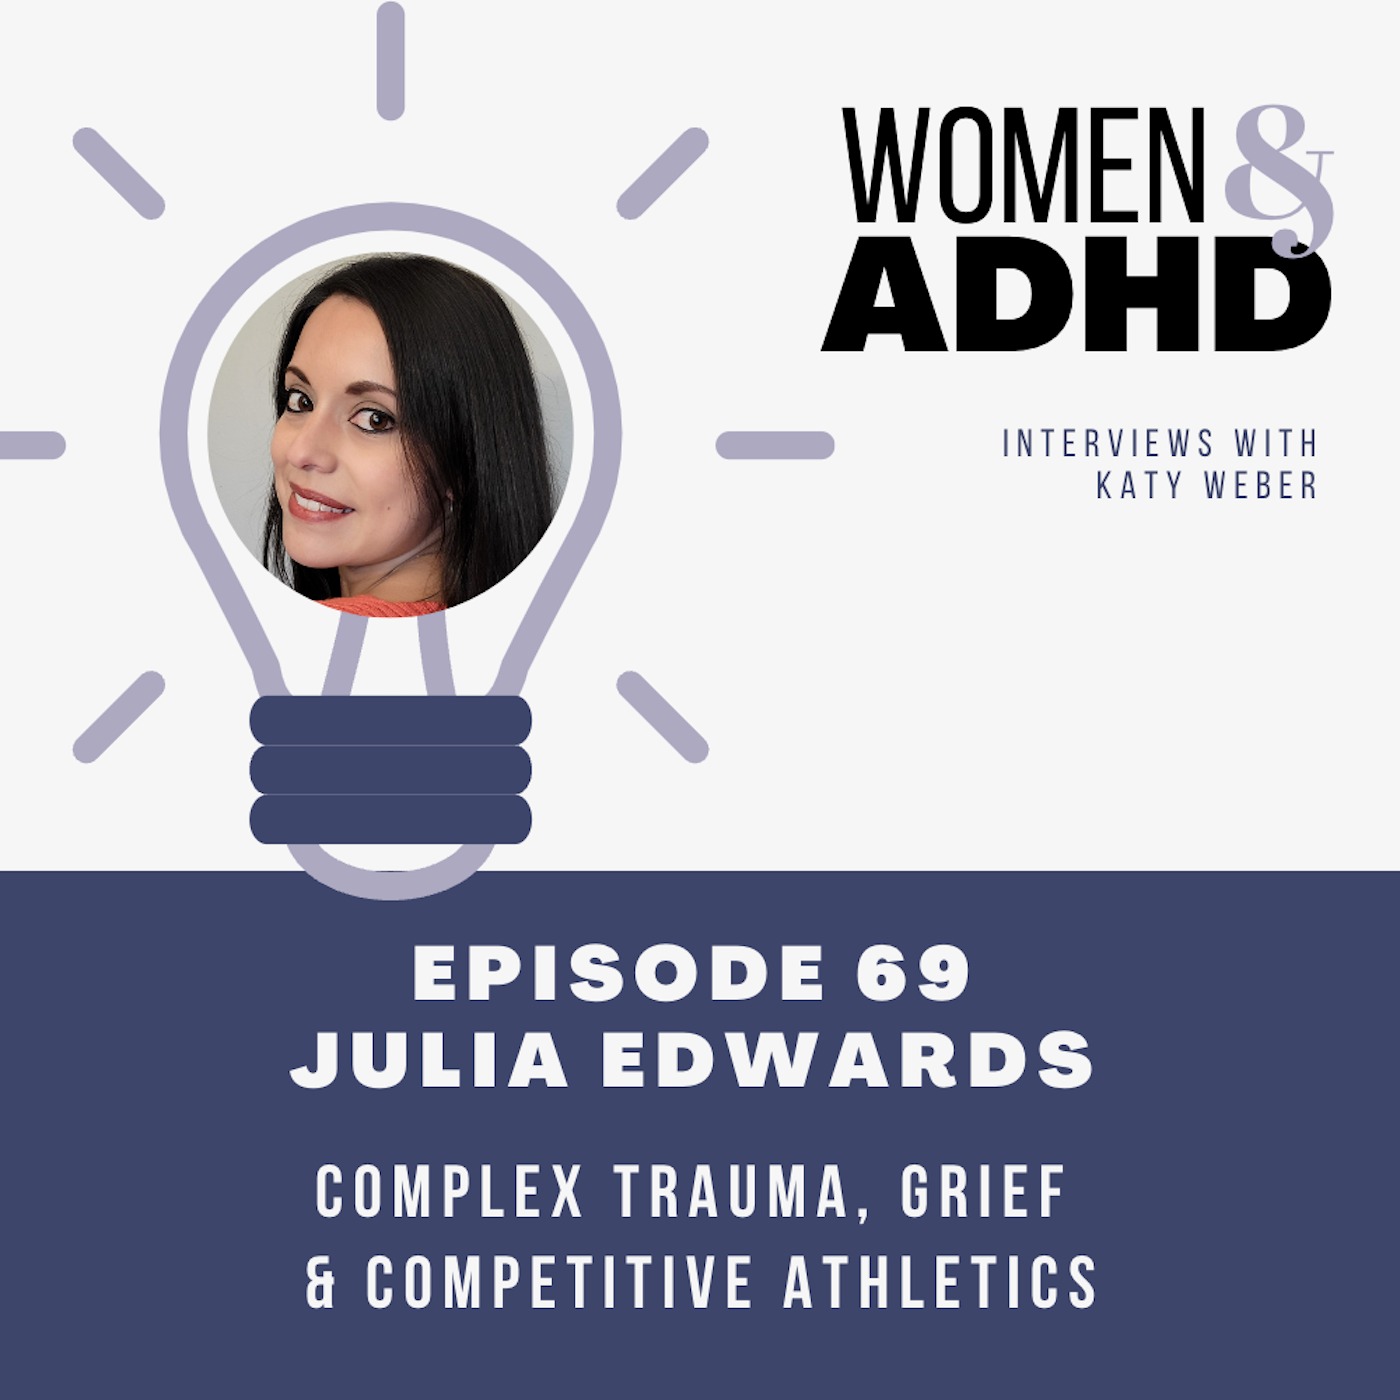 Julia Edwards: Complex trauma, grief & competitive athletics